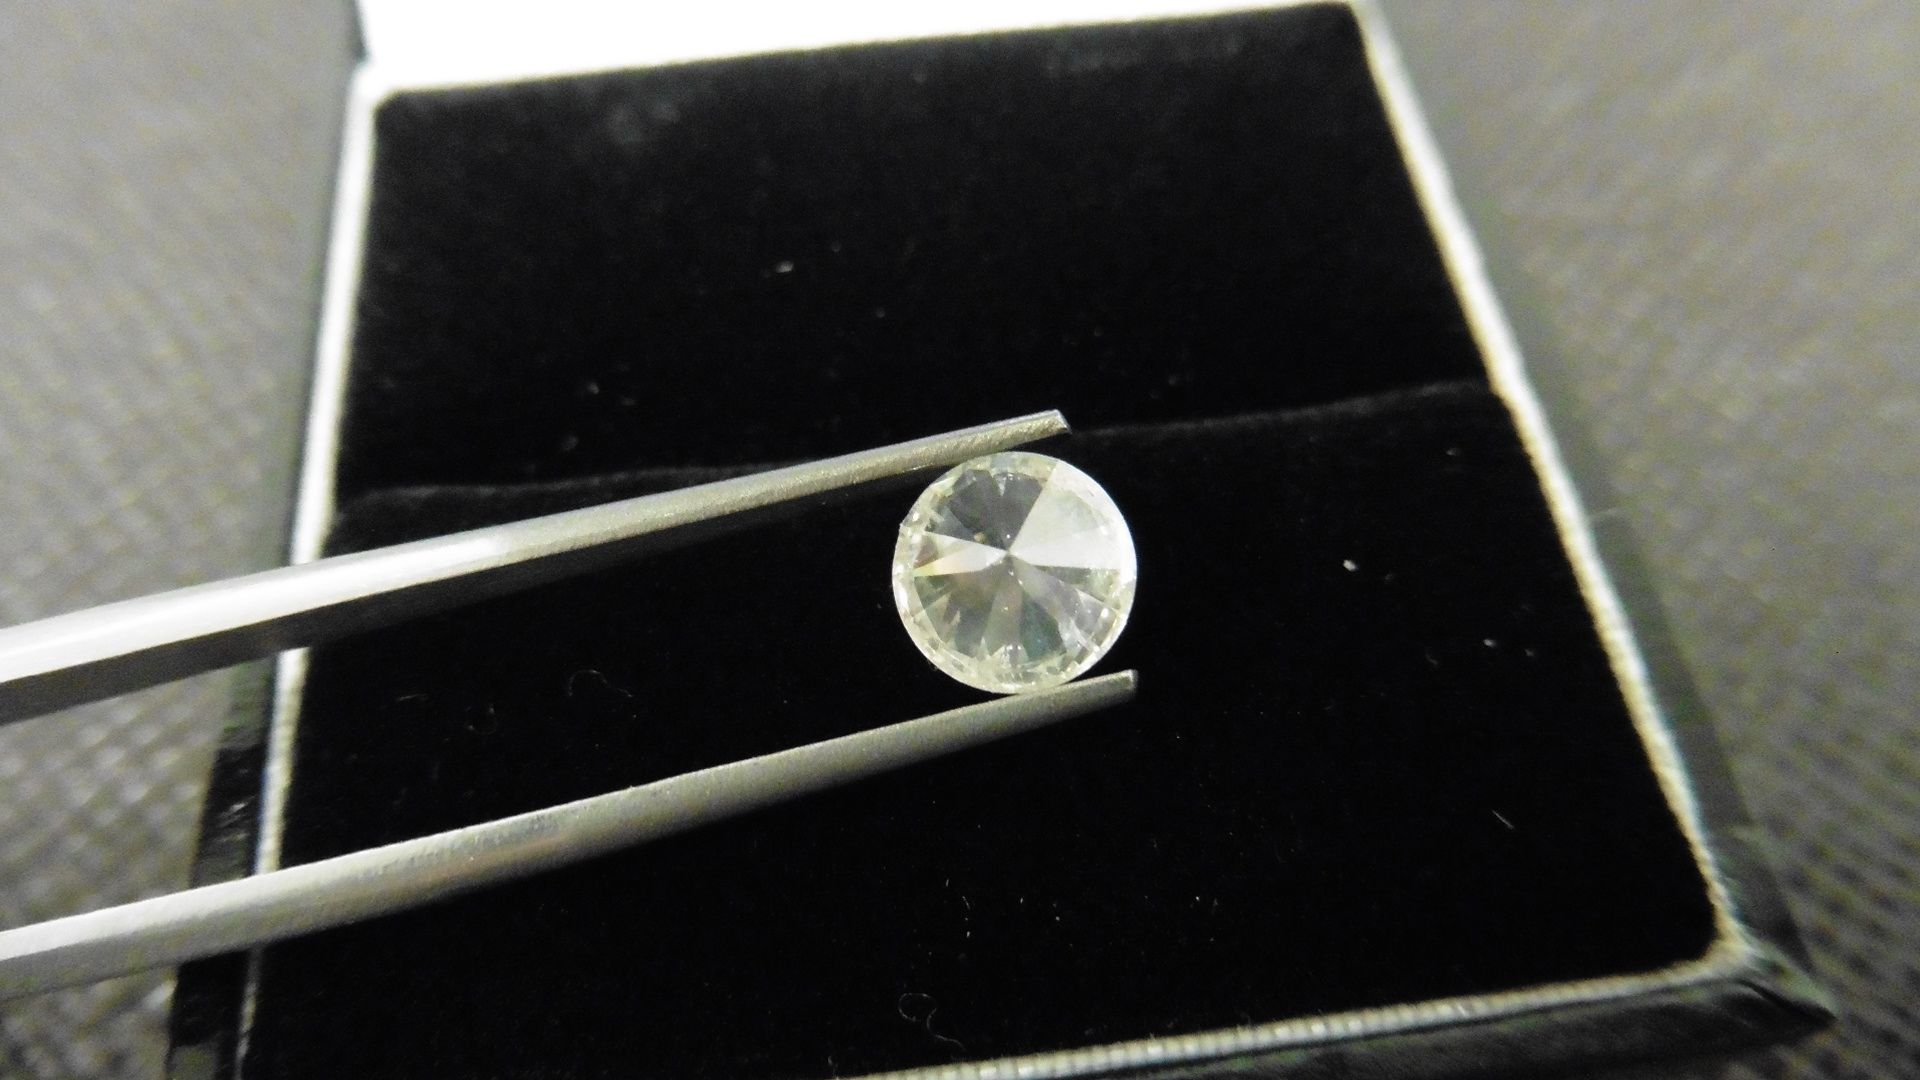 1.15ct natural loose brilliant cut diamond. H colourand si2 clarity.6.66 x 6.69 x 4.15mm. Colour